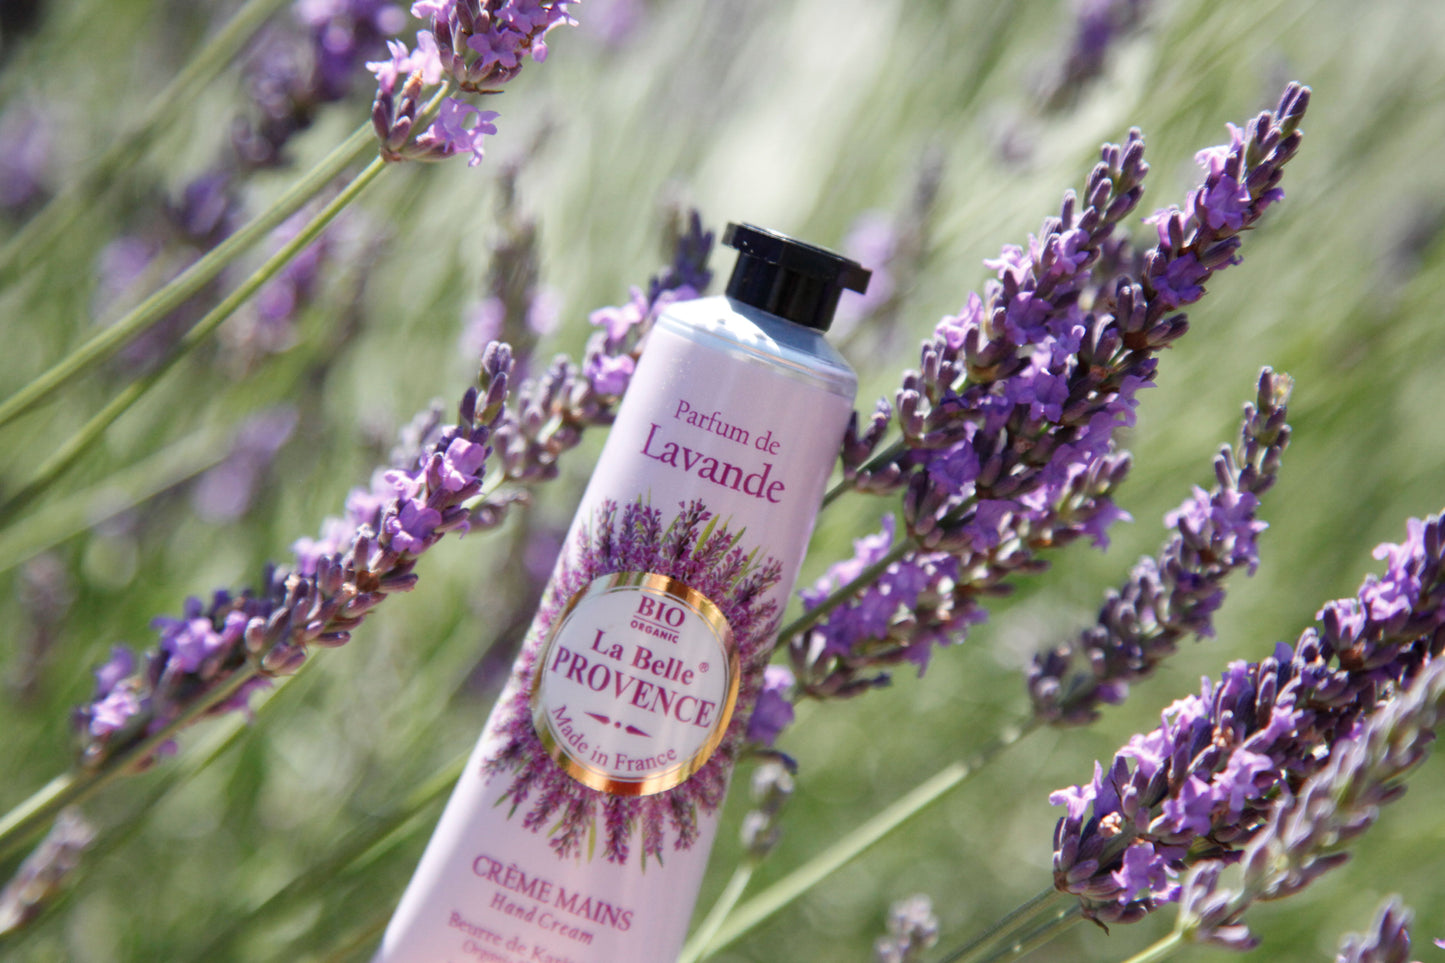 Lavander Hand Cream - La Belle Provence 1 fl.oz